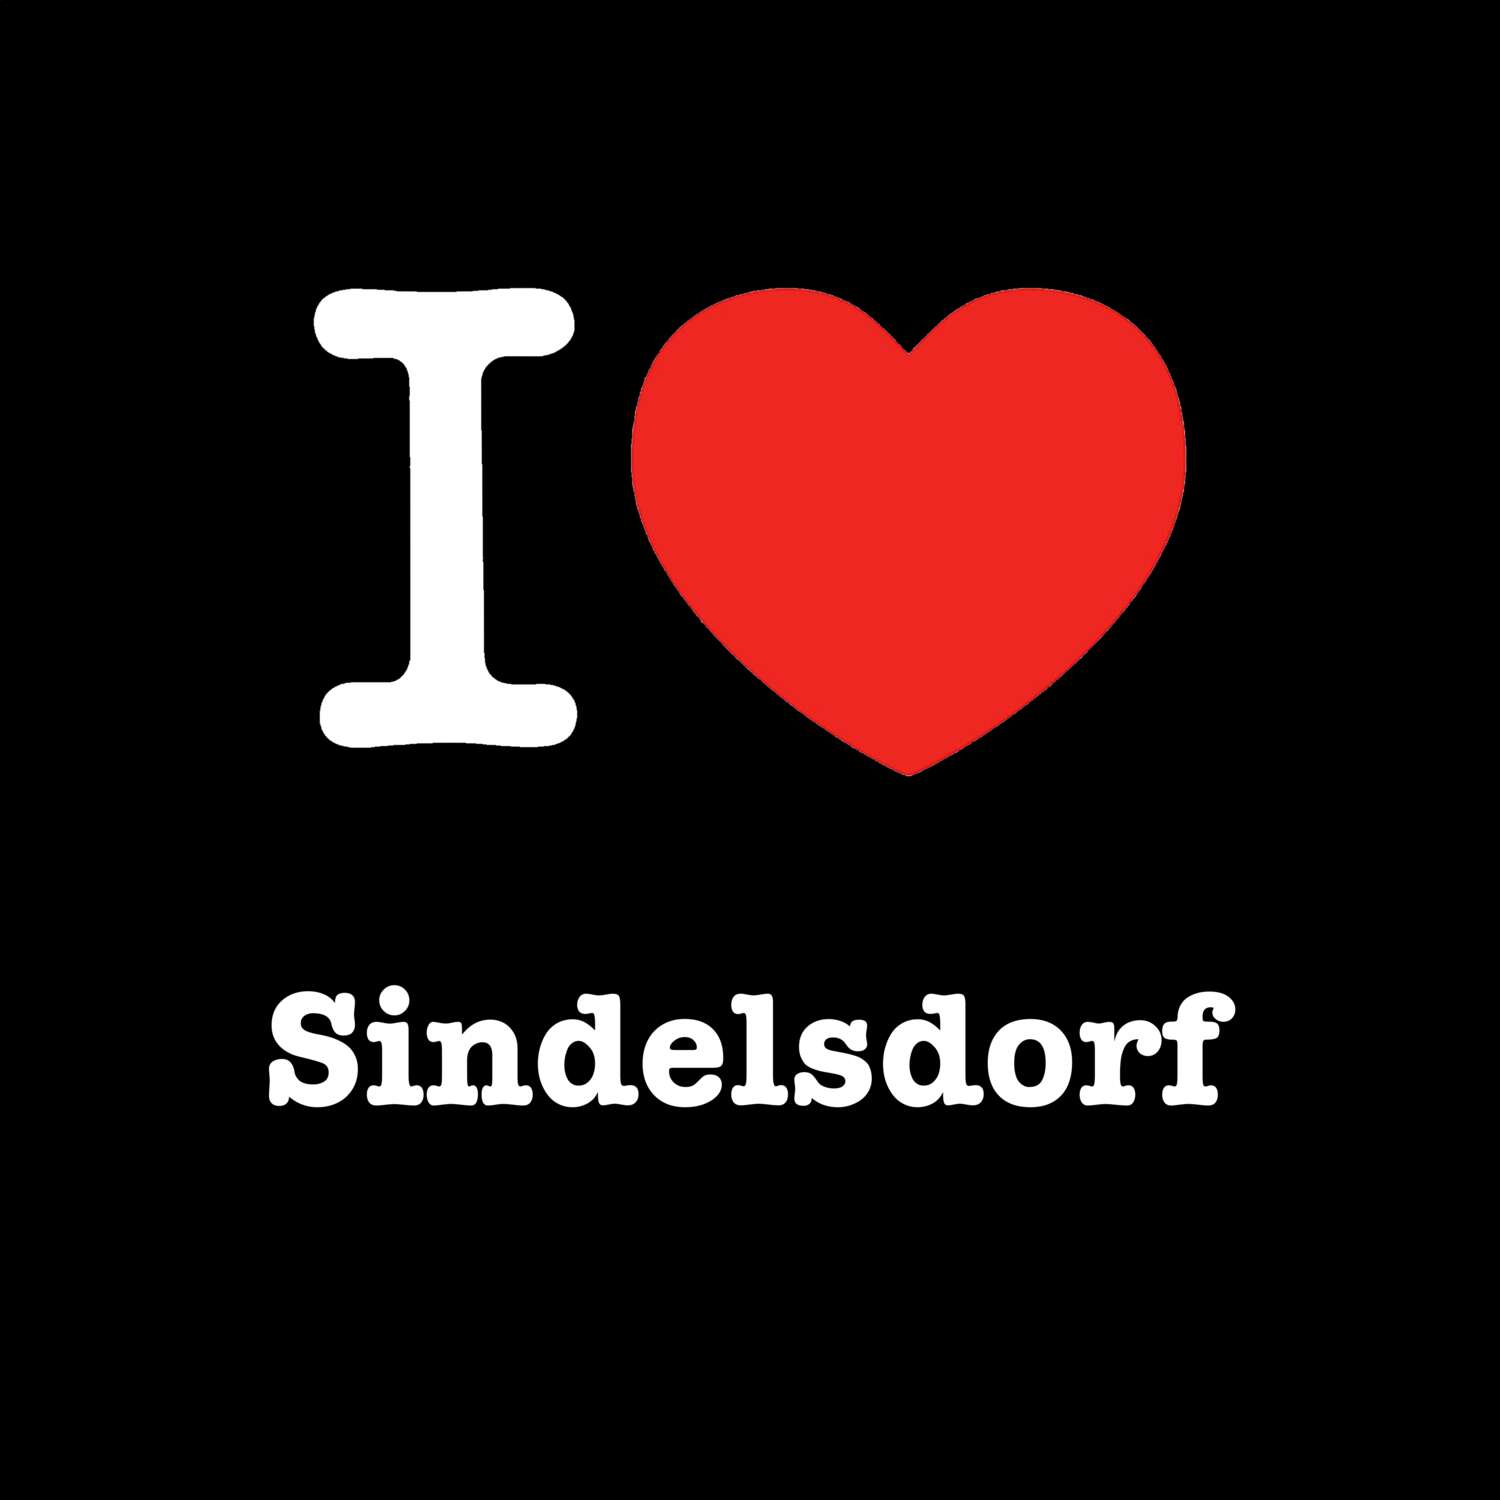 Sindelsdorf T-Shirt »I love«